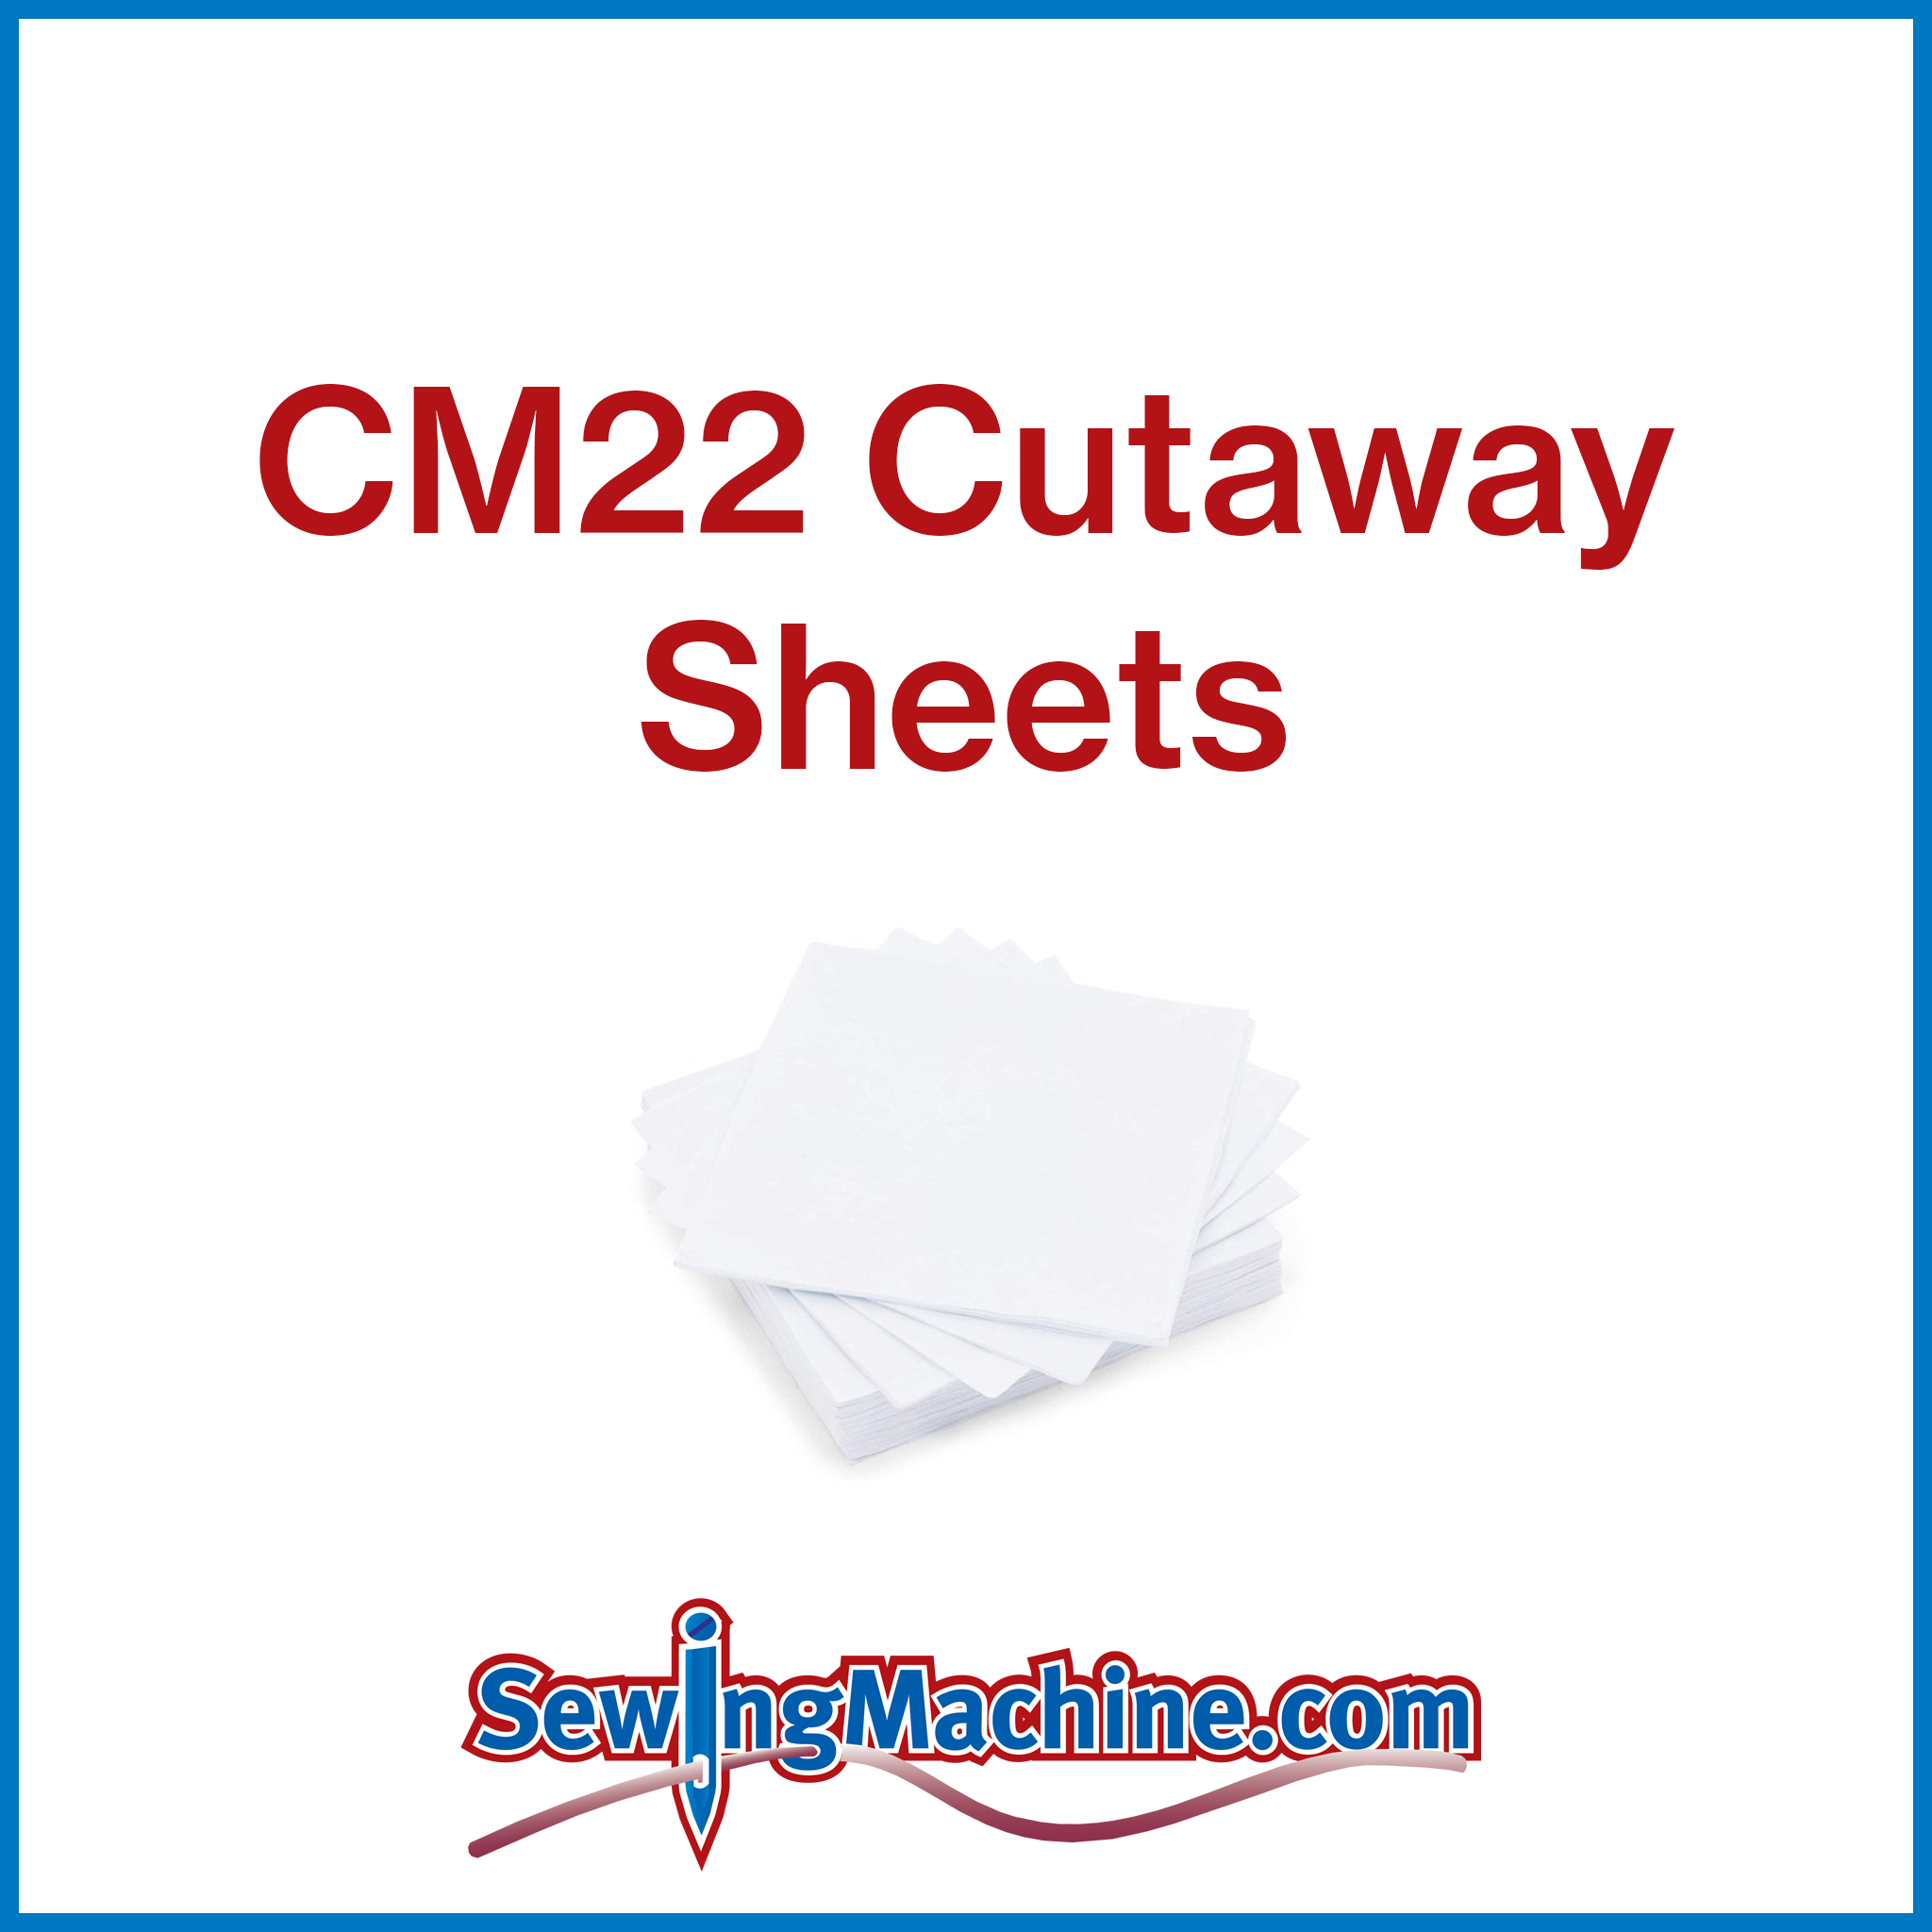 CM22 Cutaway 2.2oz Sheets